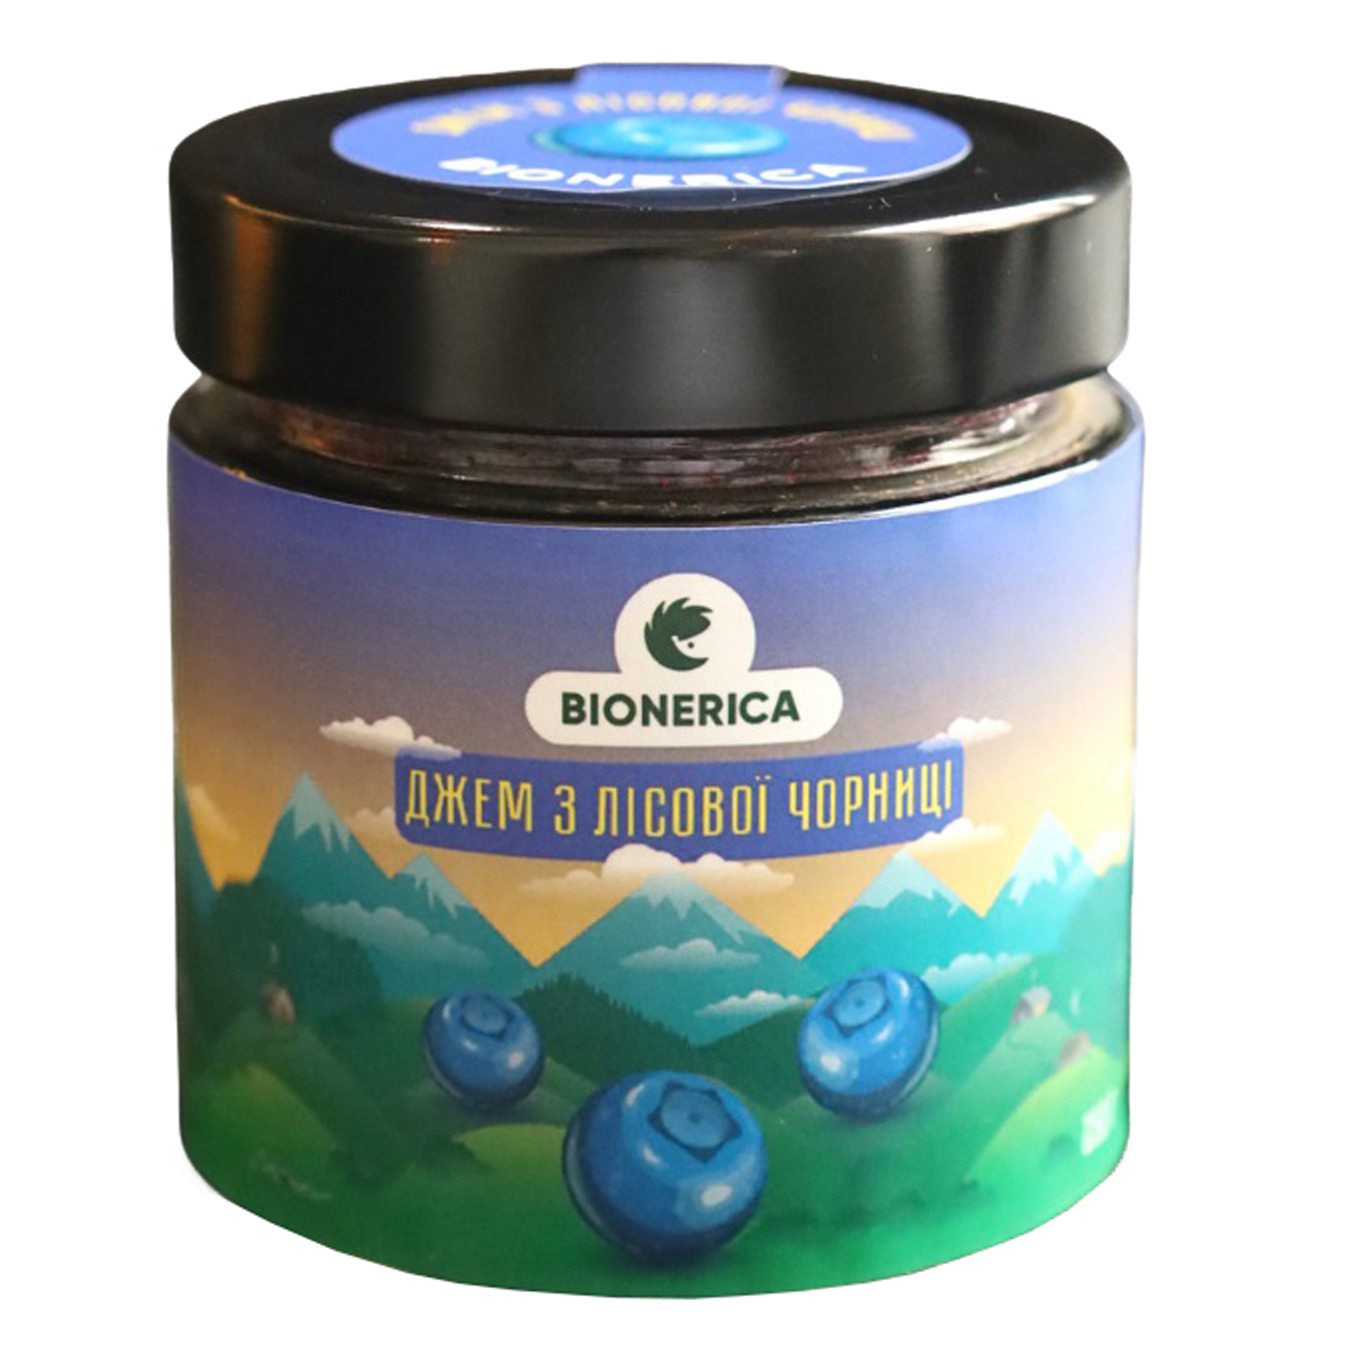 Bionerica jam from wild blueberries 250g